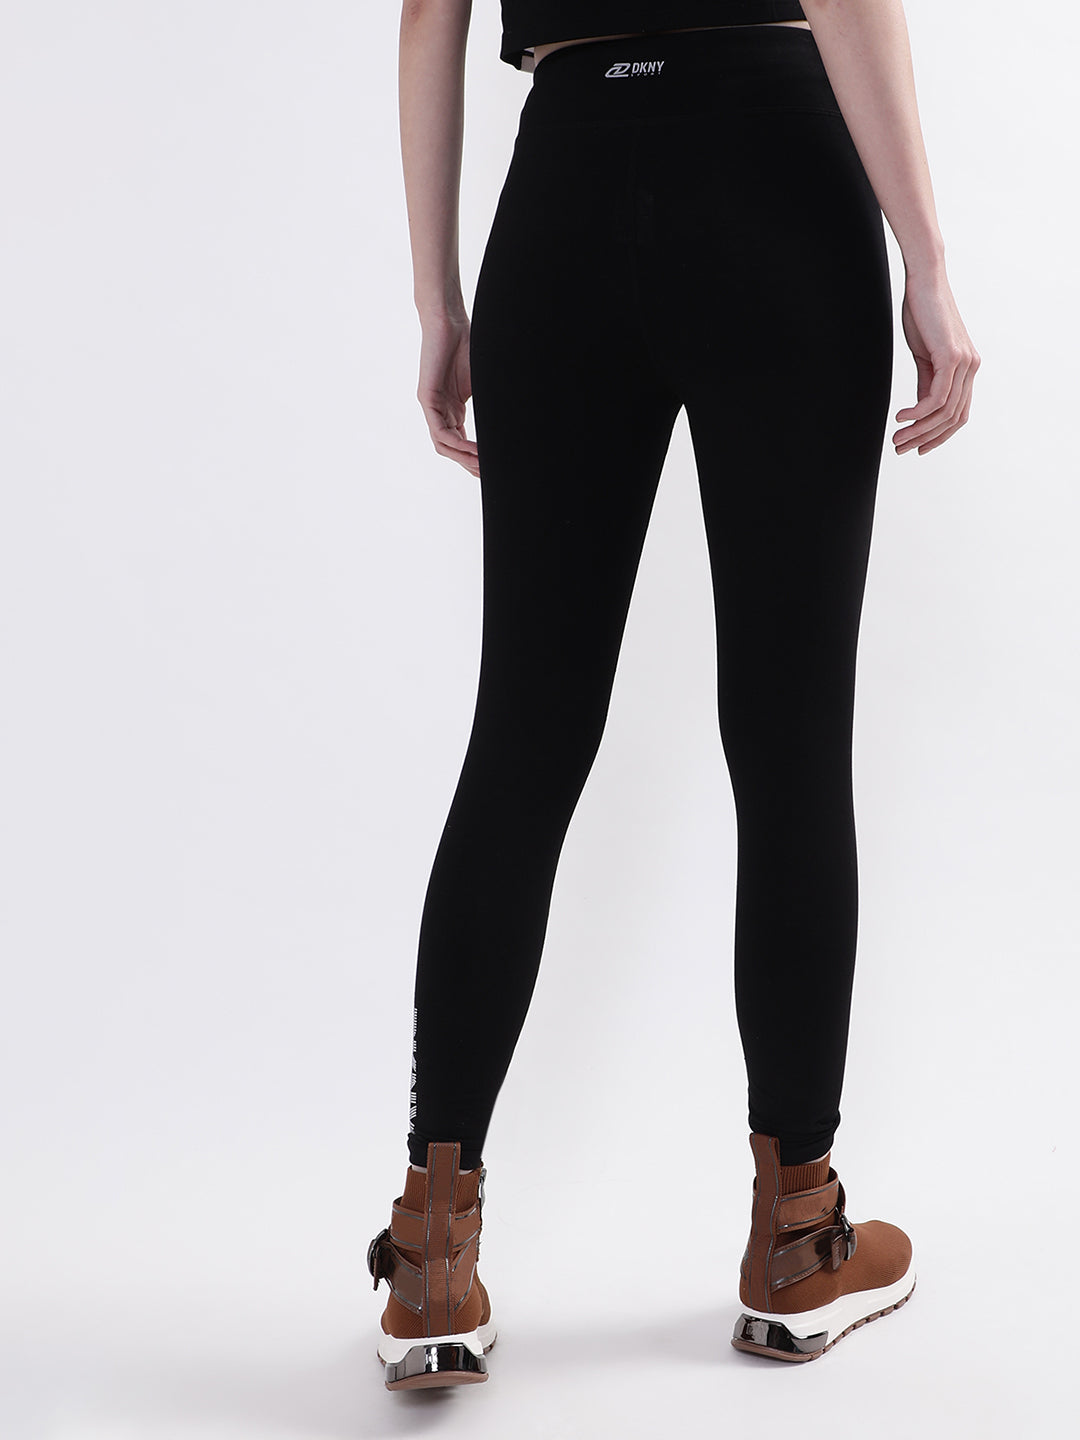 DKNY Jeans Women's Casual Mid Rise Logo Leggings, Black/White, XS at Amazon  Women's Clothing store